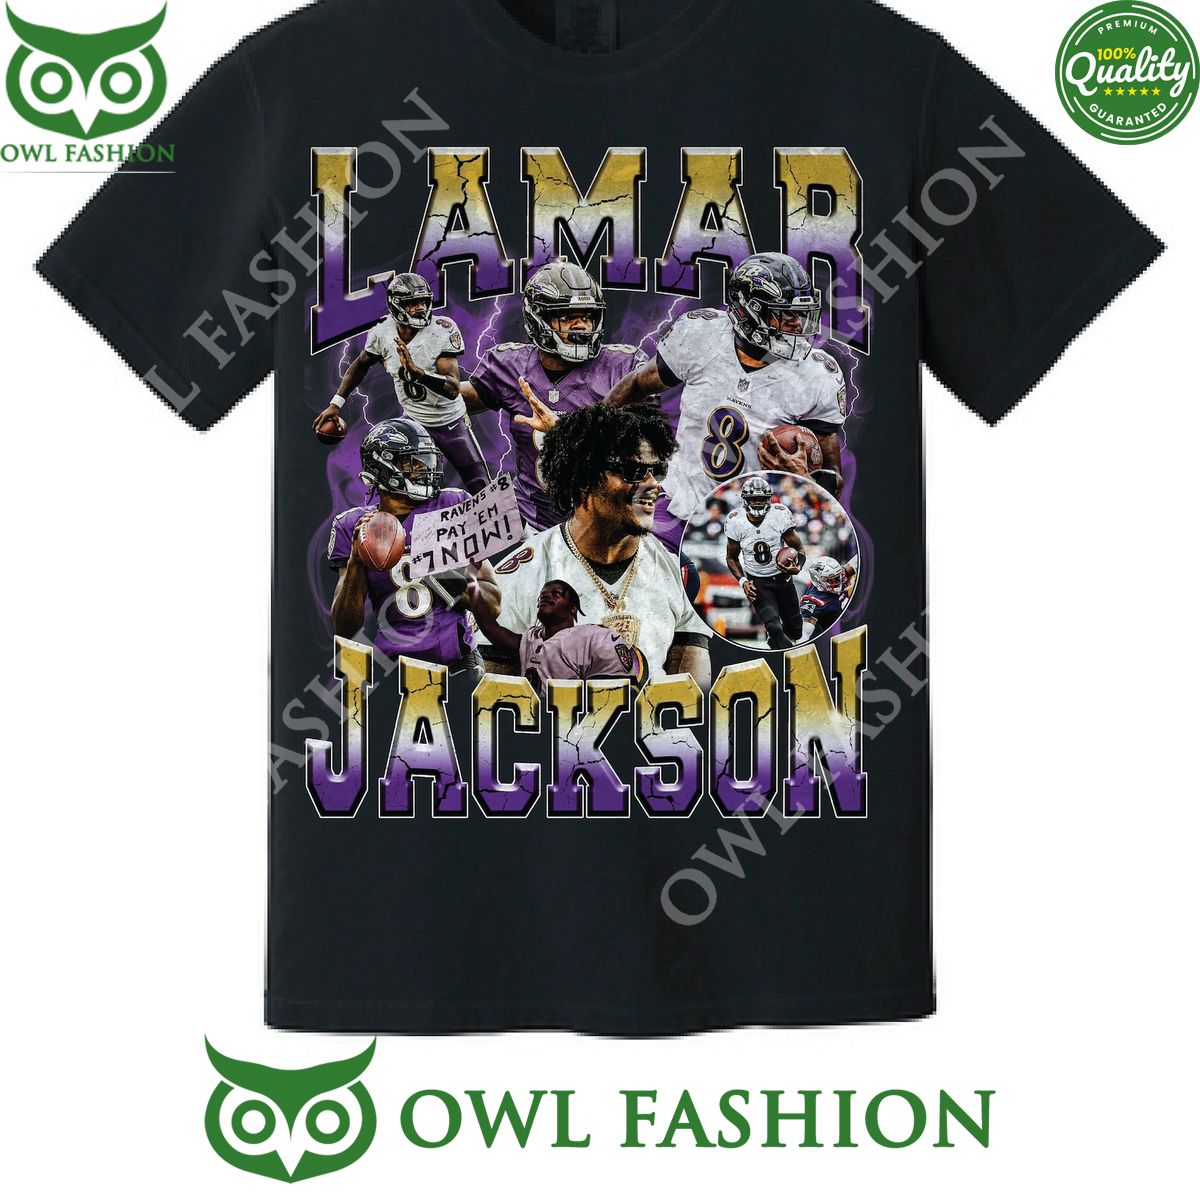 lamar jackson 90s bootleg vintage style baltimore ravens t shirt 1 lJoi2.jpg